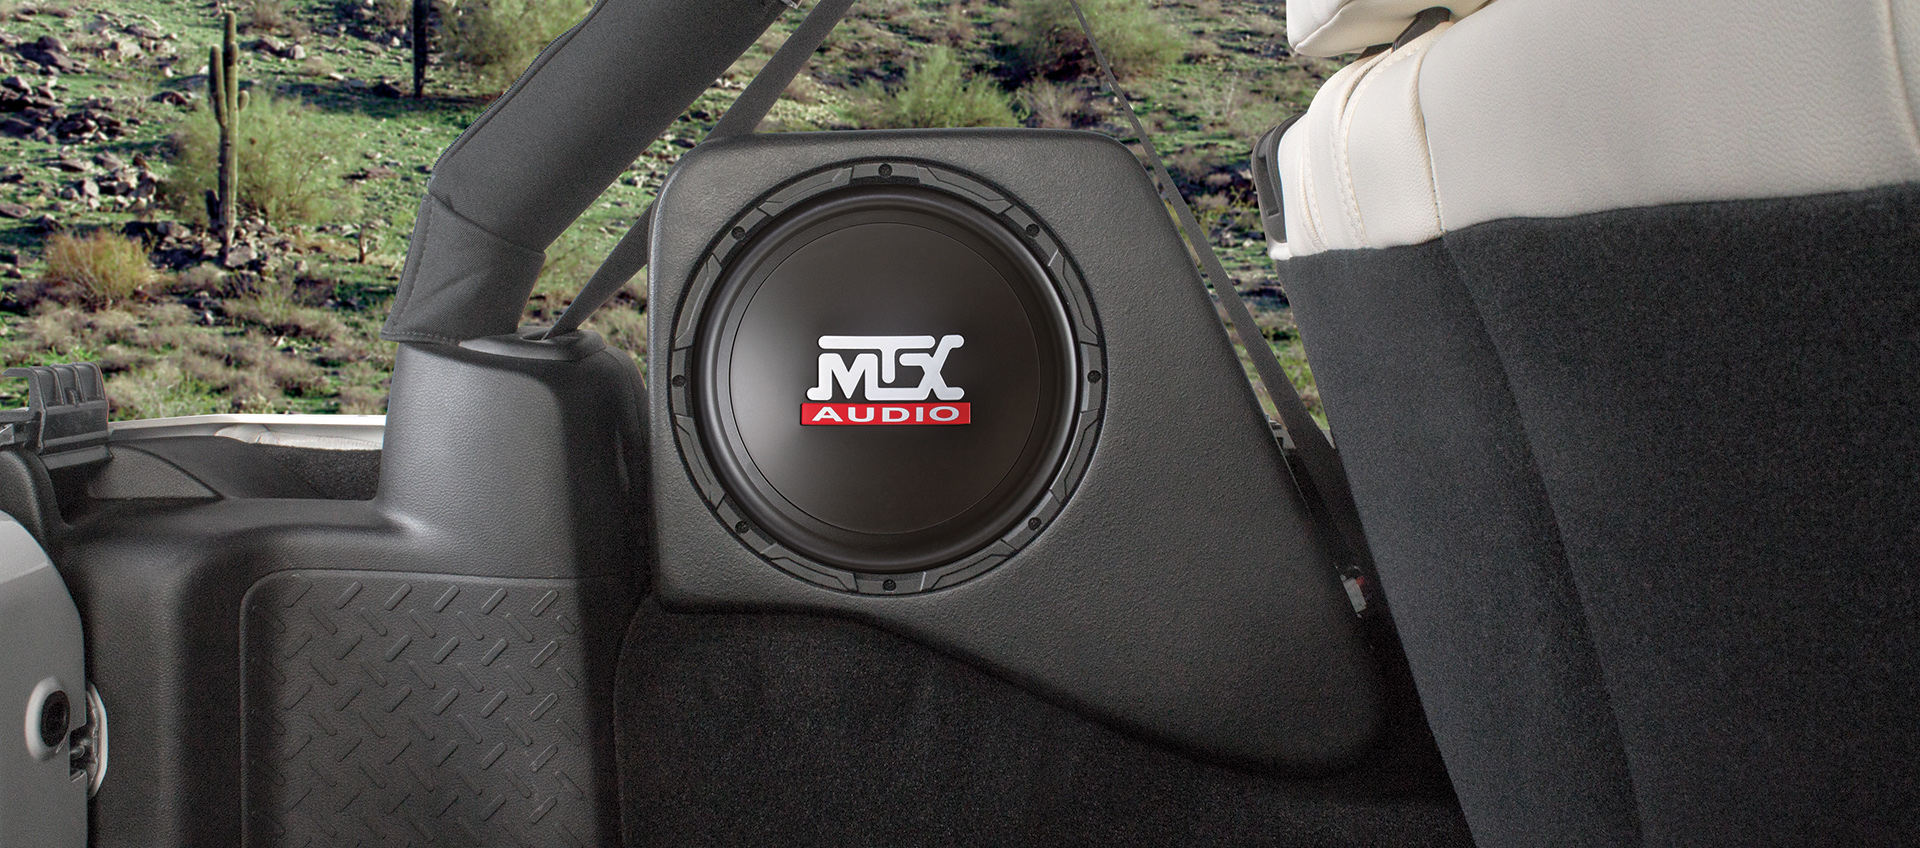 WRANGER JK | MTX Audio - Serious About Sound®